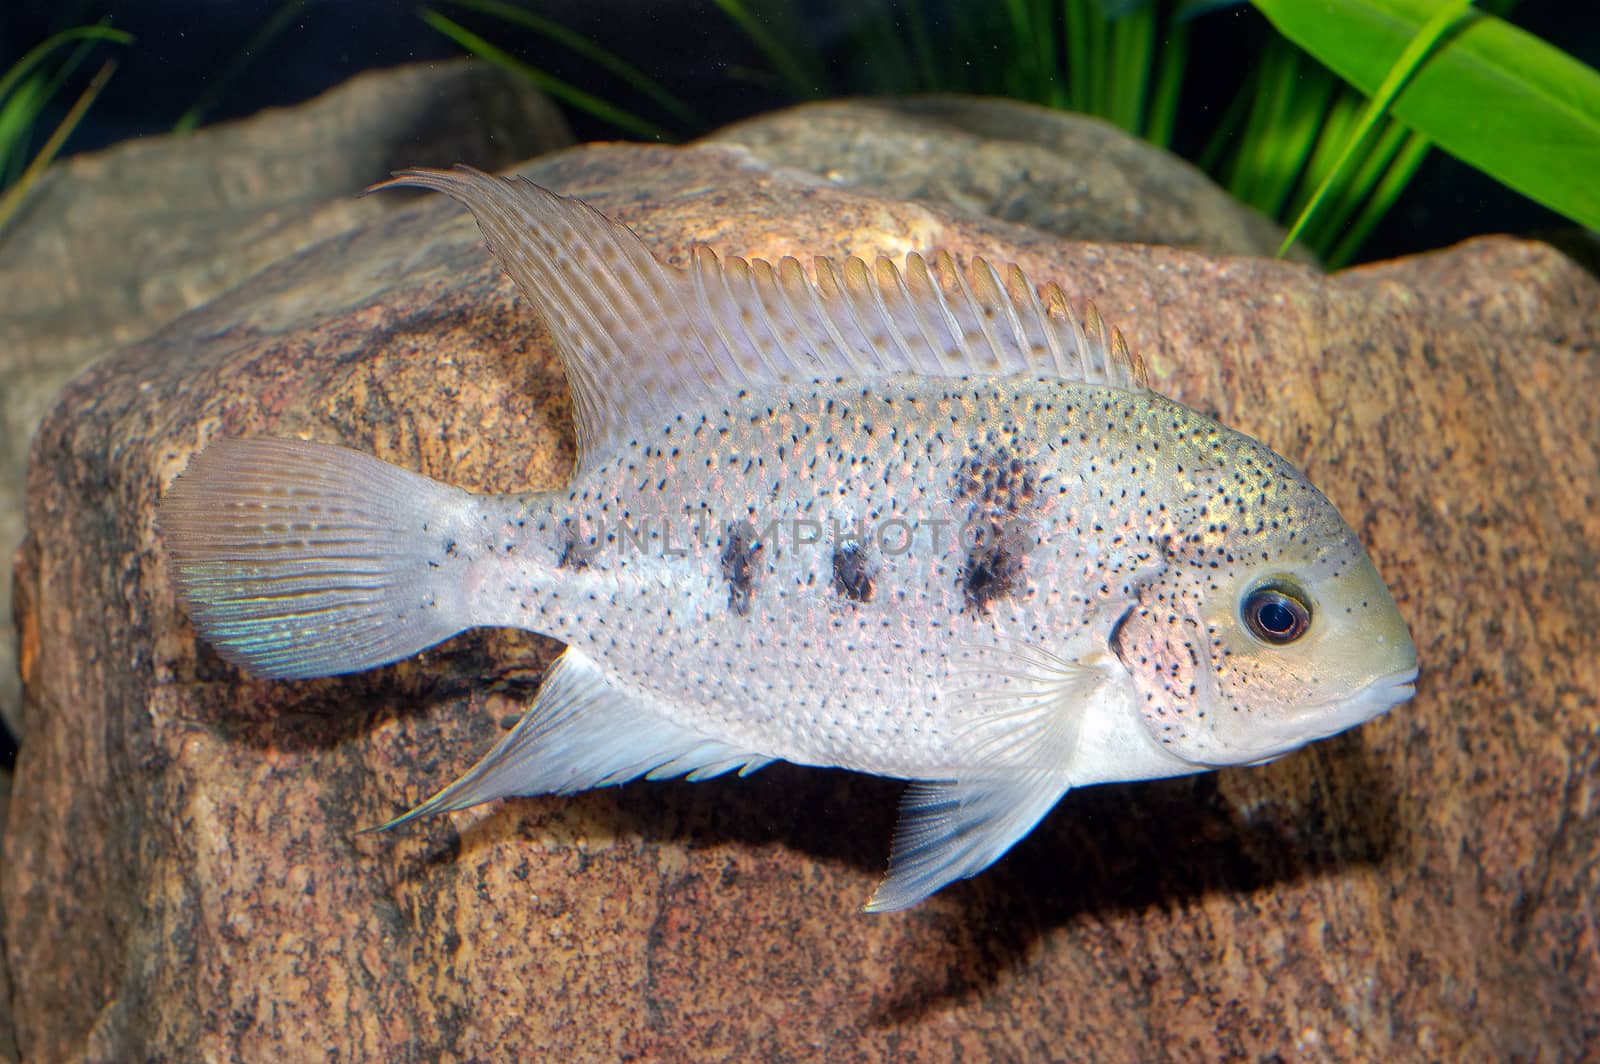 Nice white cichlid fish from genus Vieja.